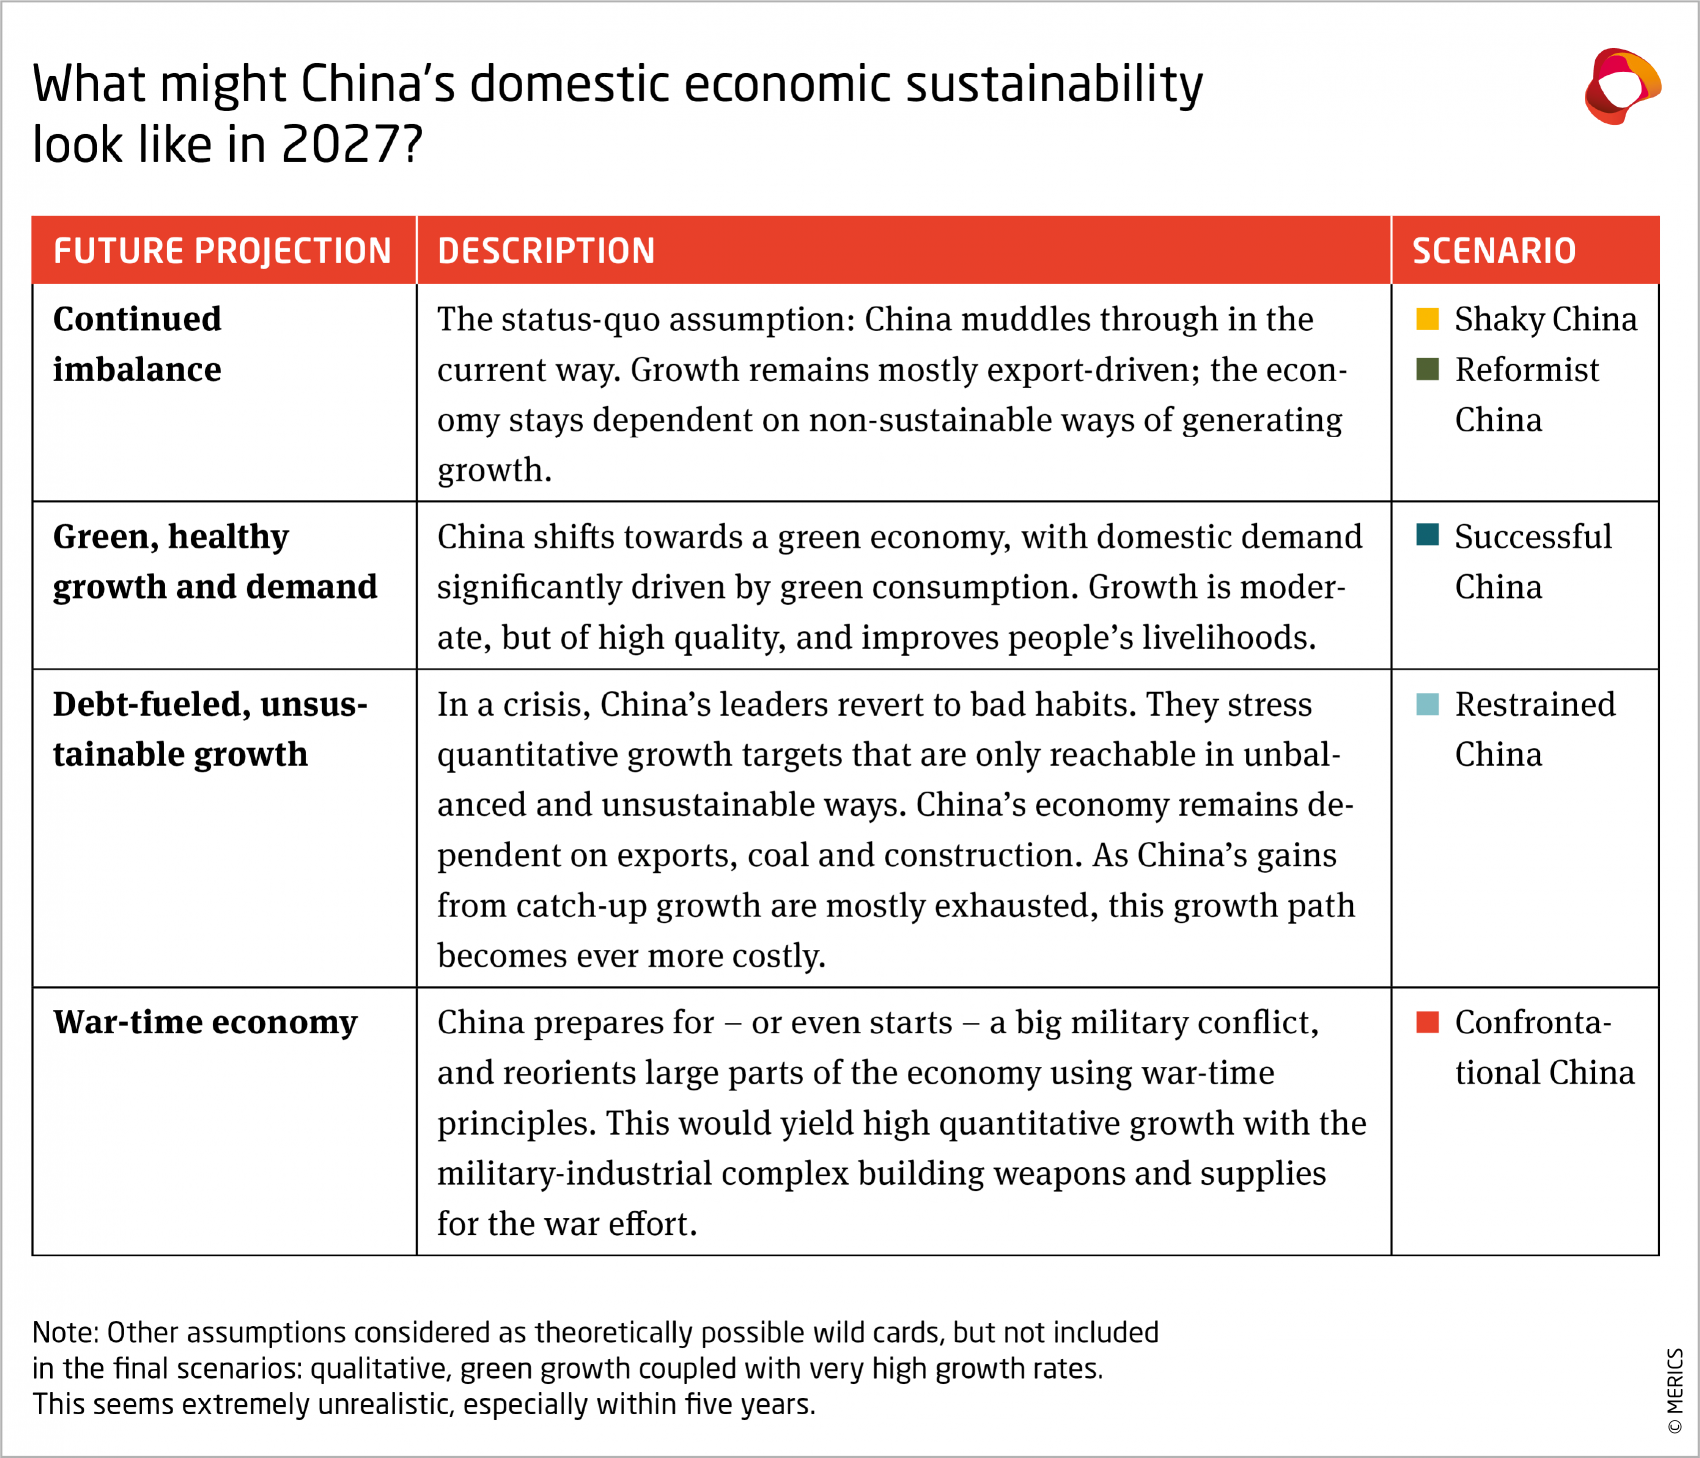 China’s domestic economic sustainability in 2027